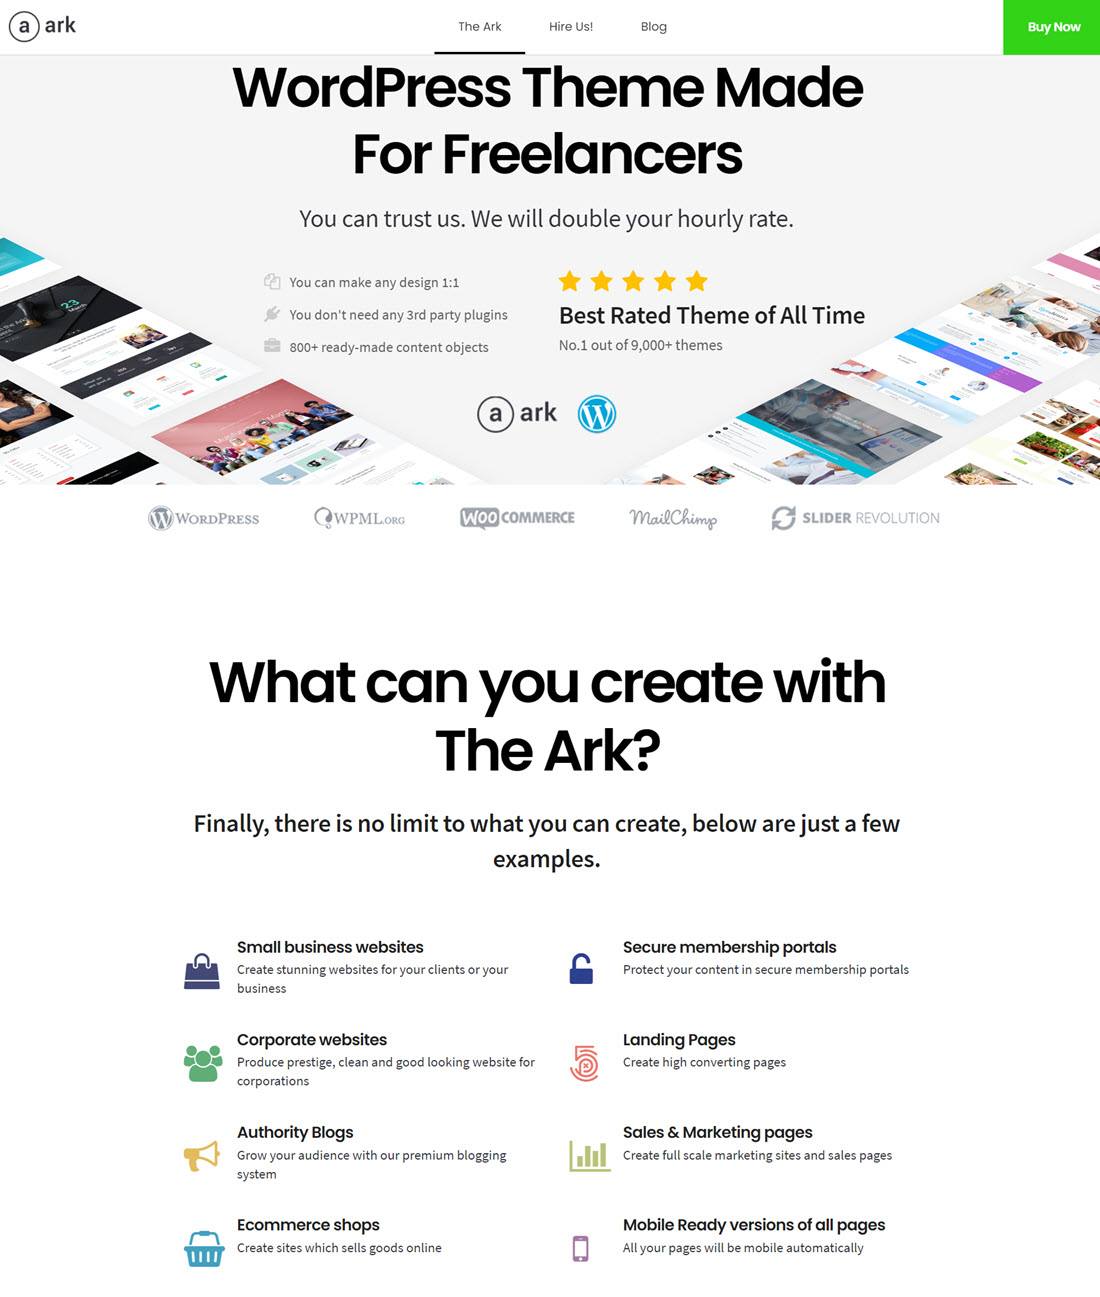 The Ark WordPress Theme made for Freelancers Demo